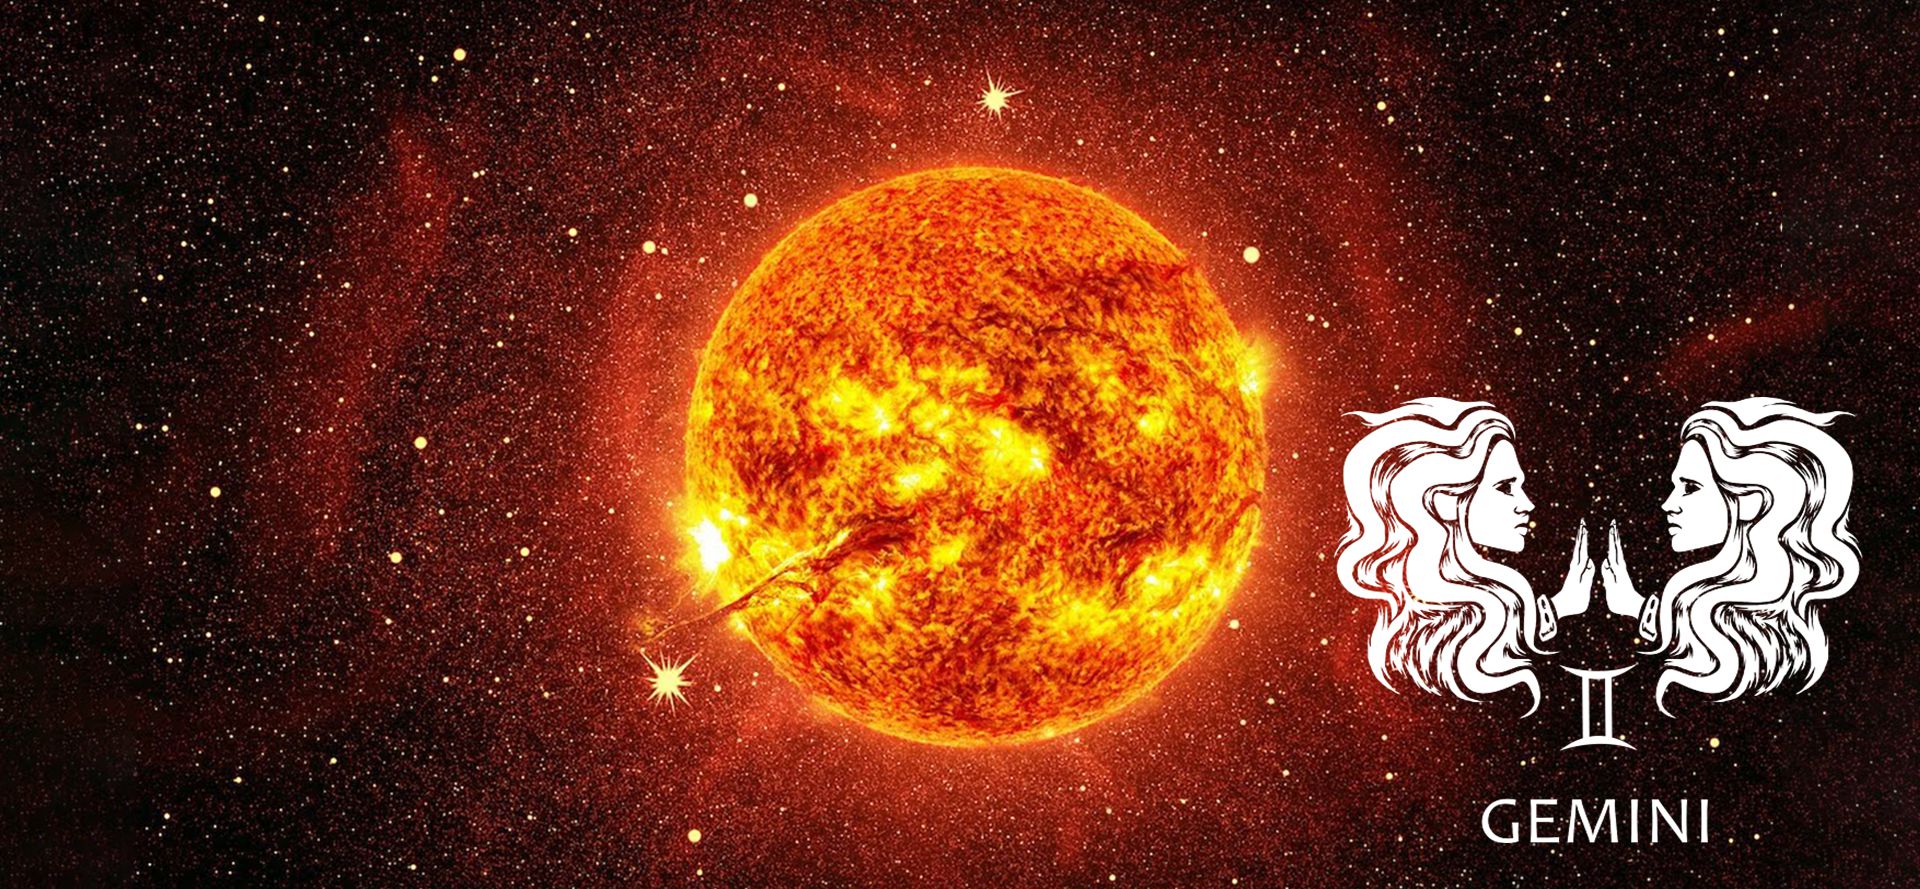 Gemini sign and Sun.